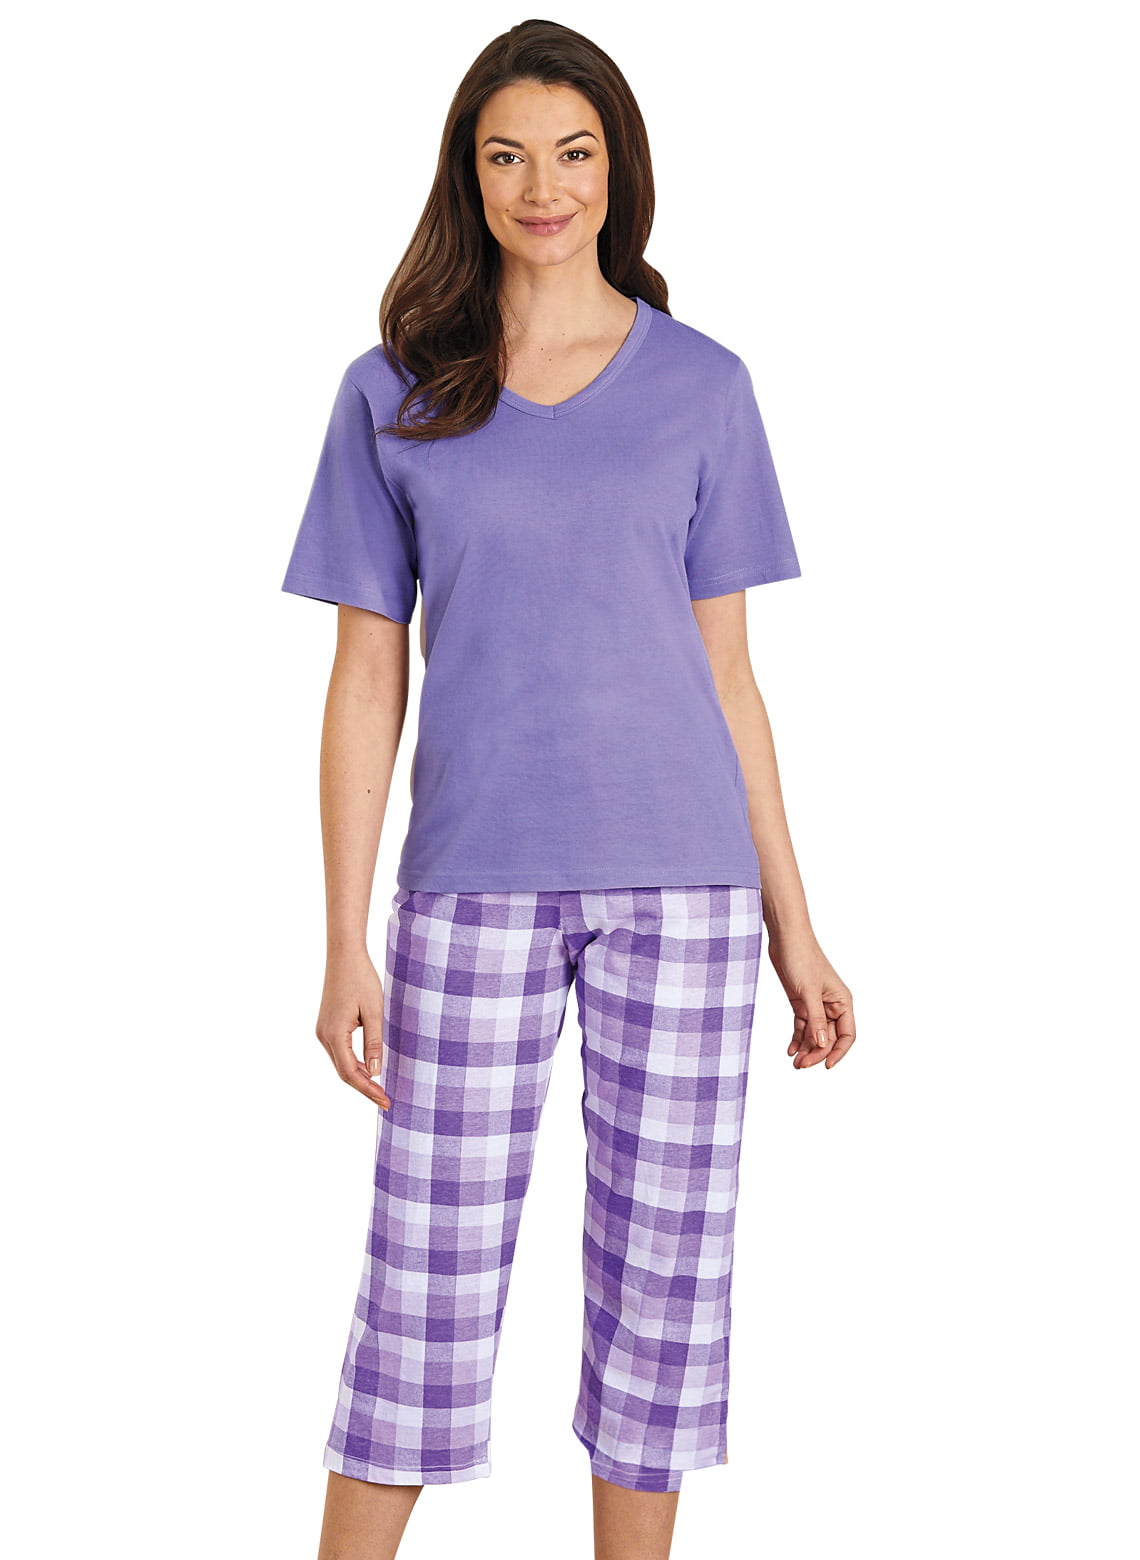 Sleepwear Tops with Capri Pants Casual and Fun Prints Pajama Sets Women’s Pajama Set